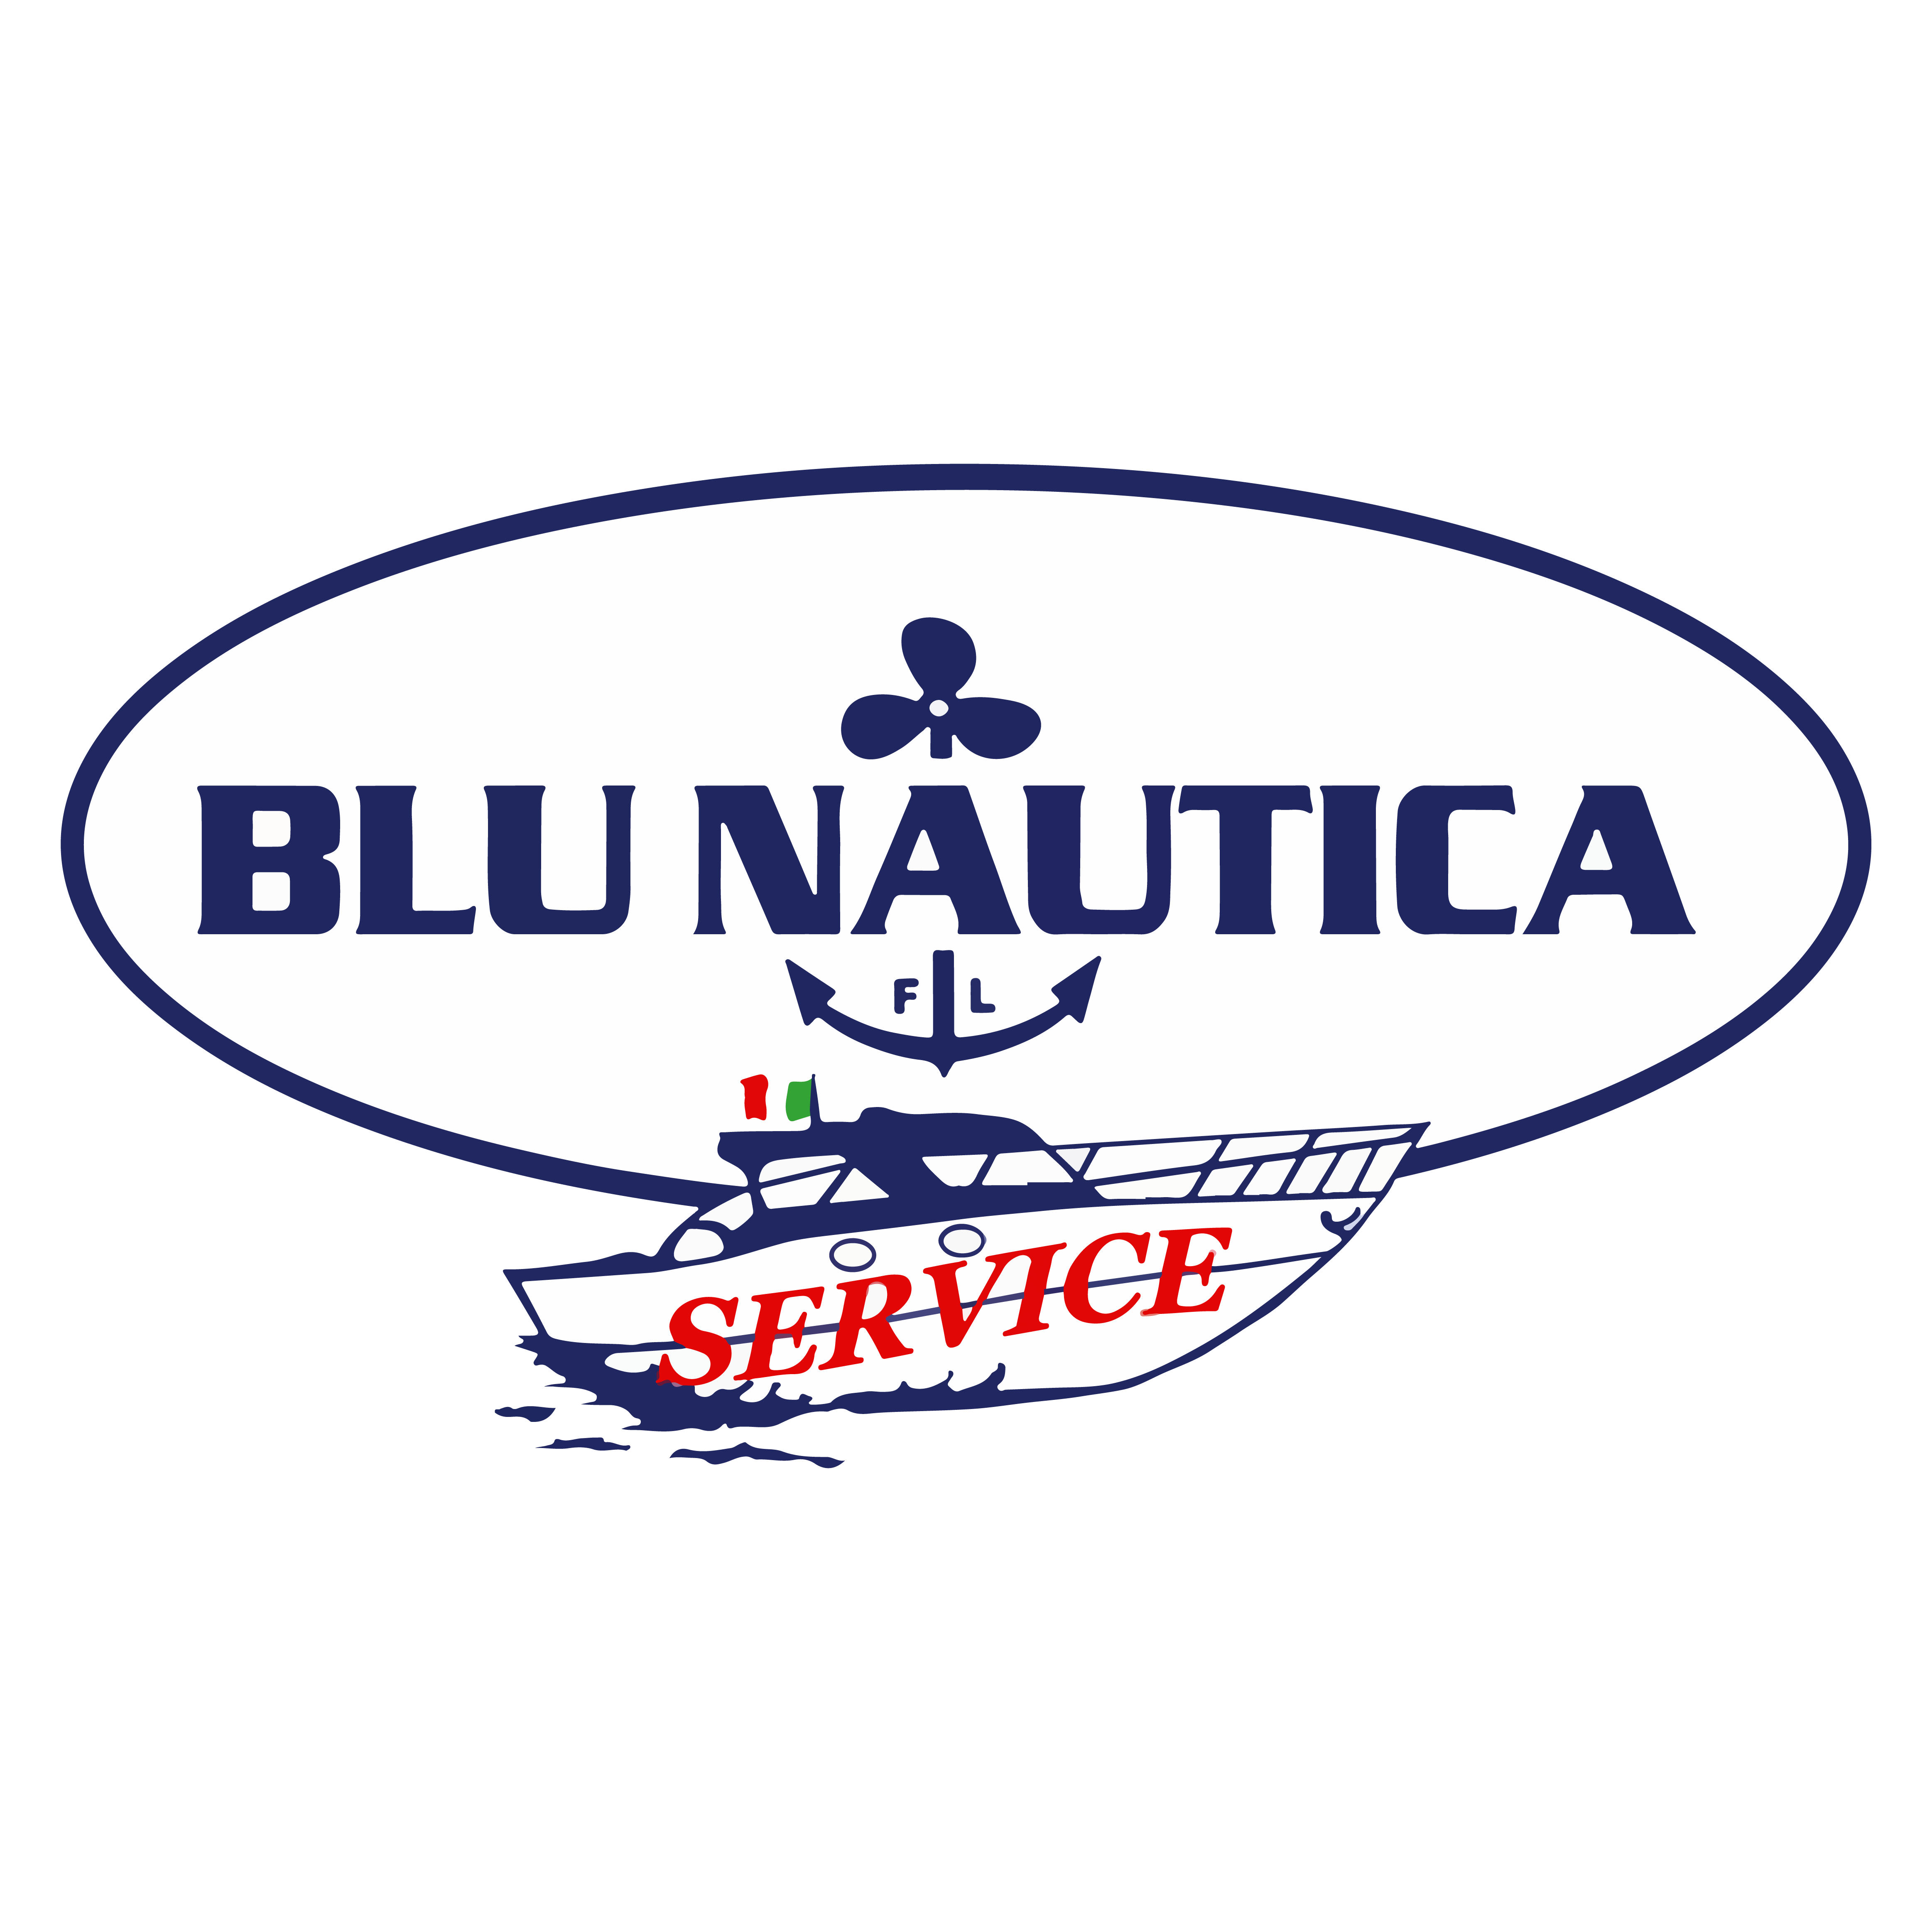 Blunautica